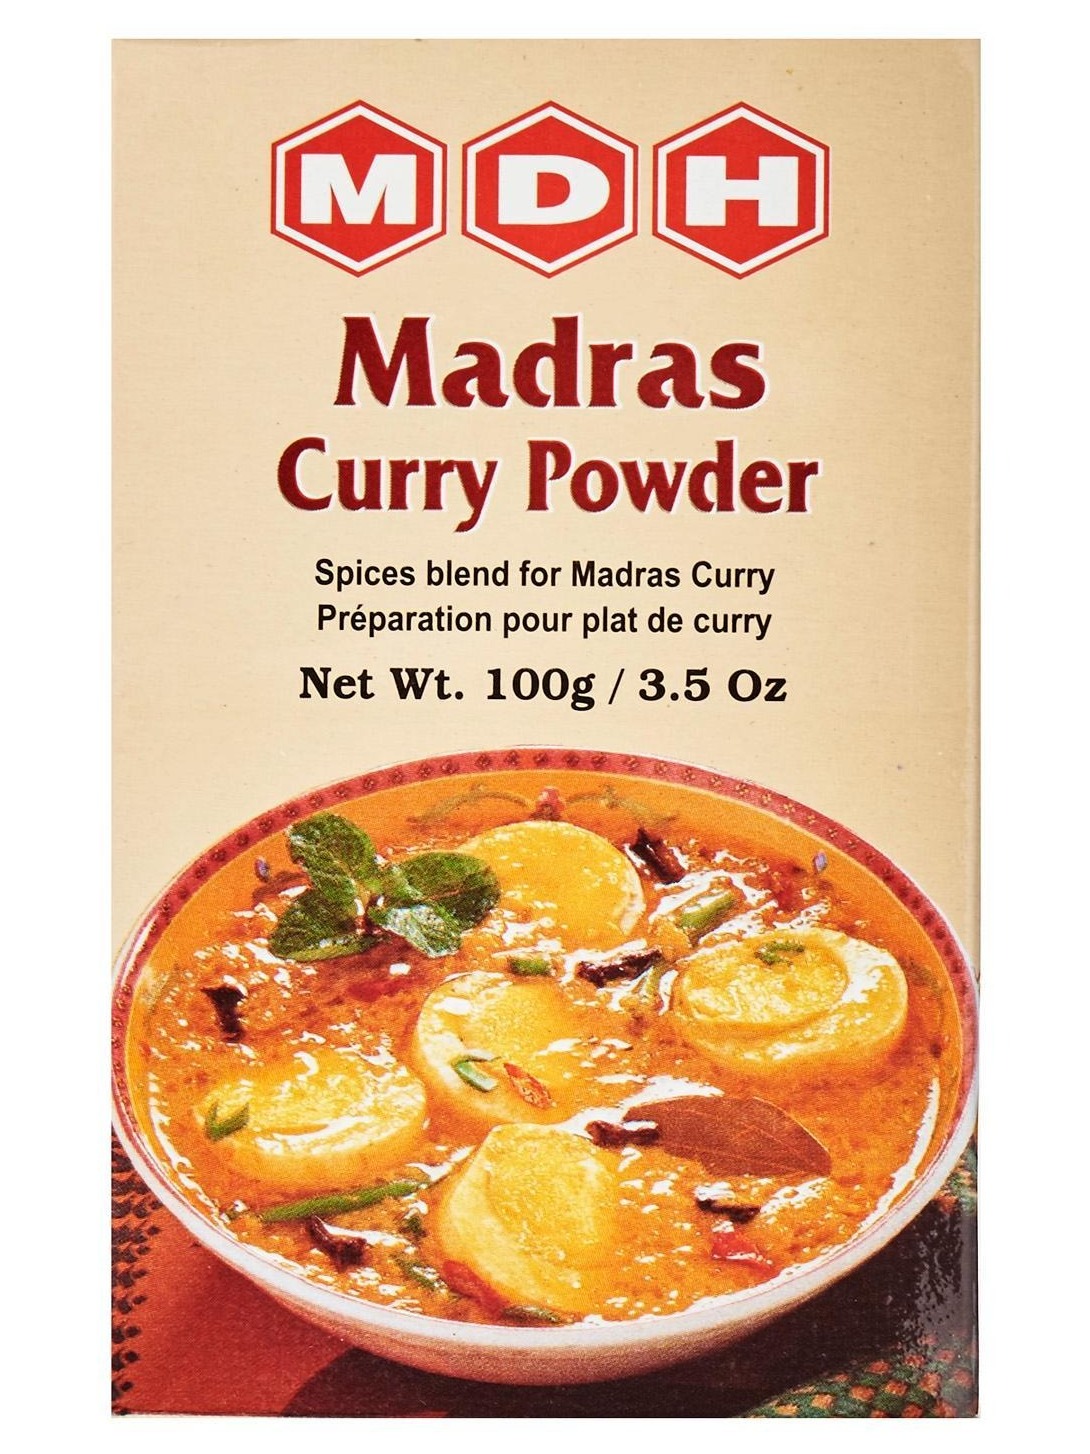 MDH Madras Curry Powder 100g.